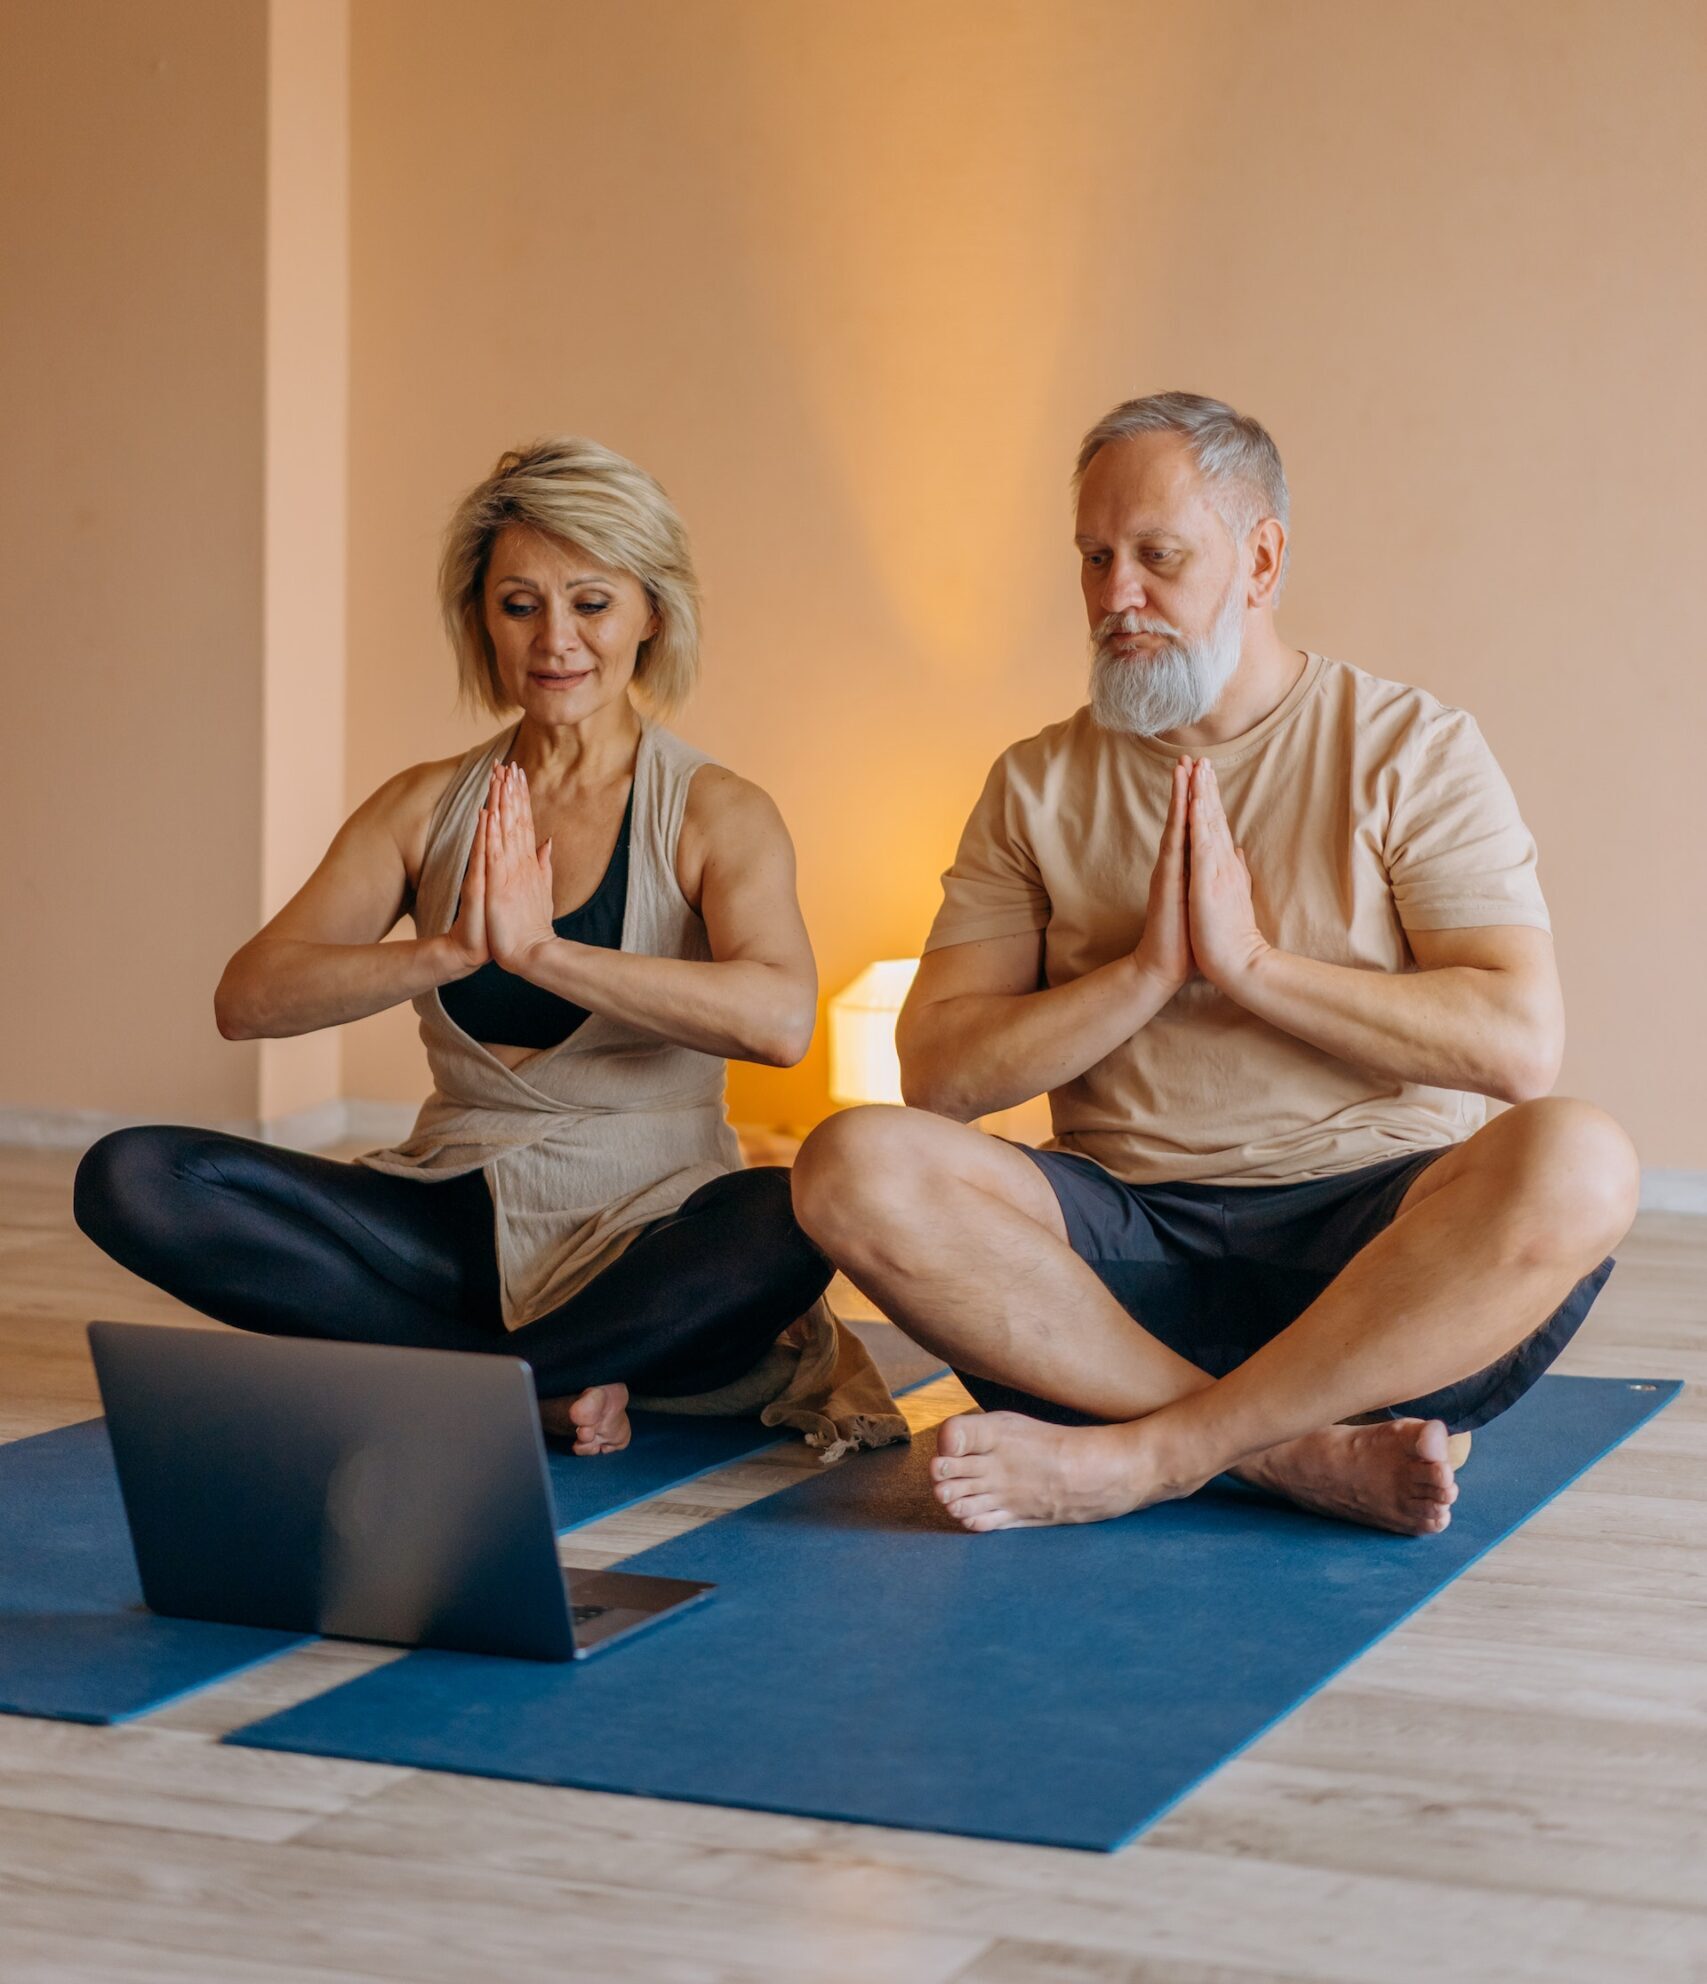 Choose Our Online Yoga Classes